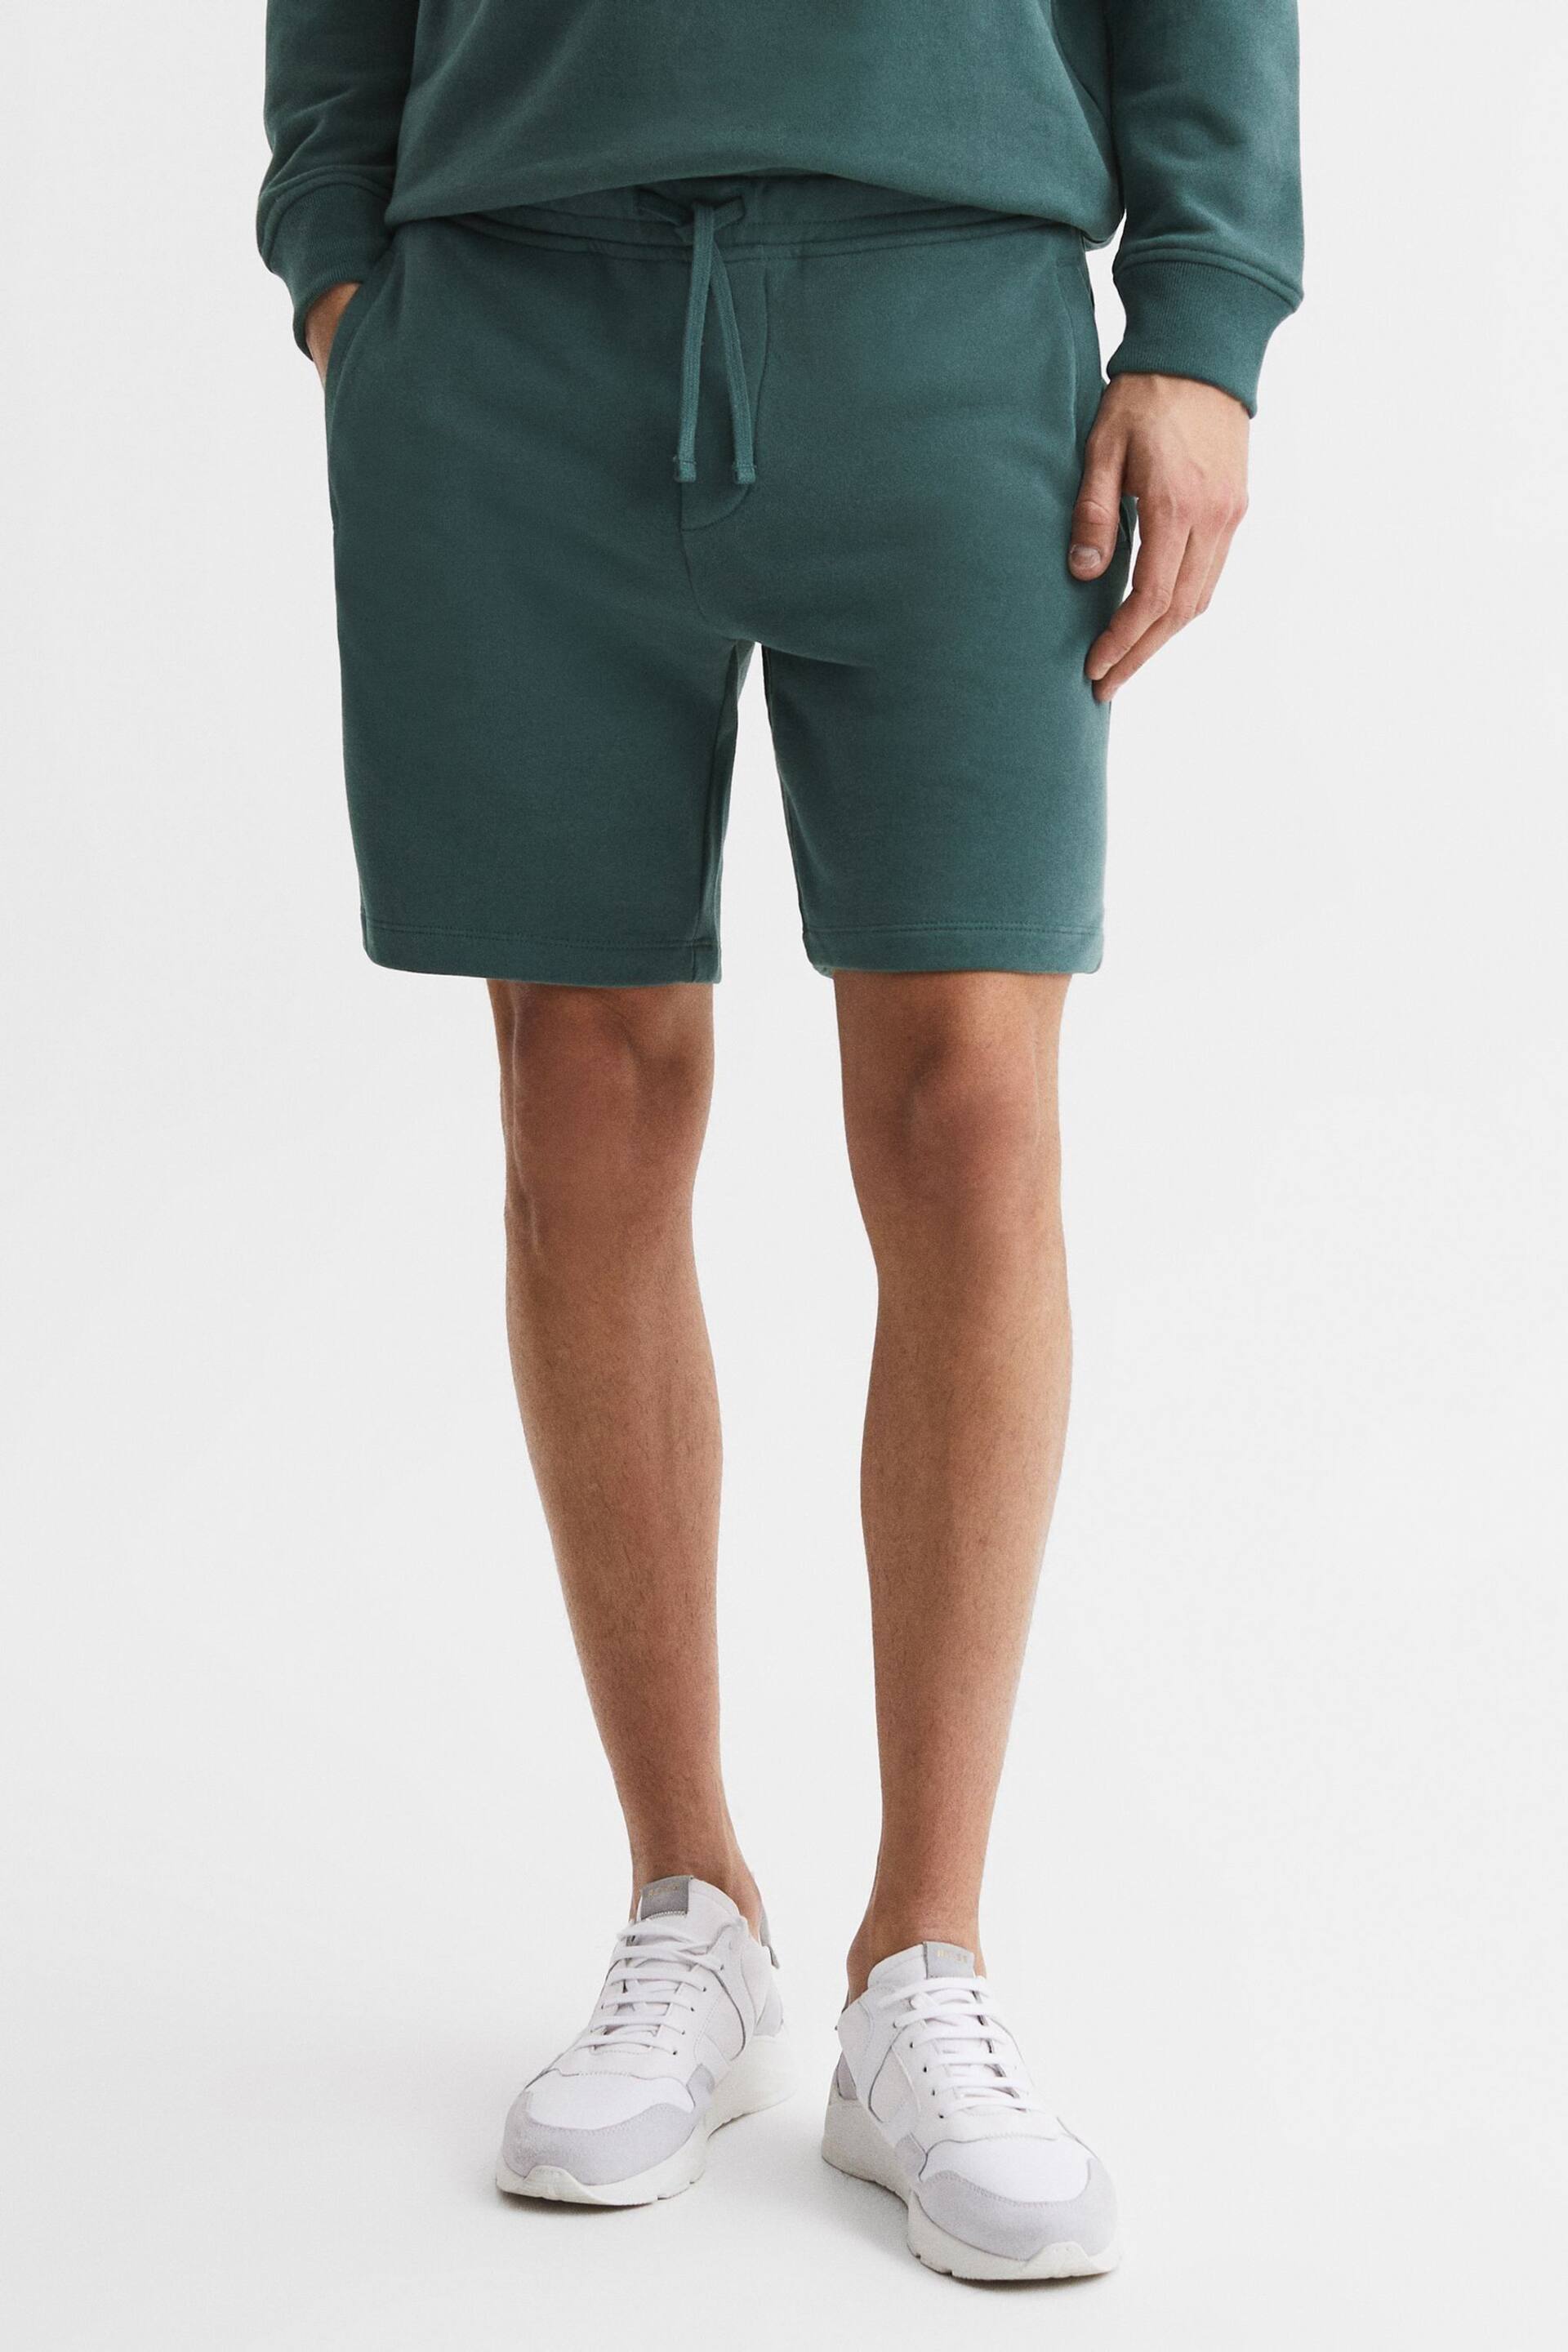 Reiss Midnight Green Henry Garment Dye Jersey Shorts - Image 1 of 5